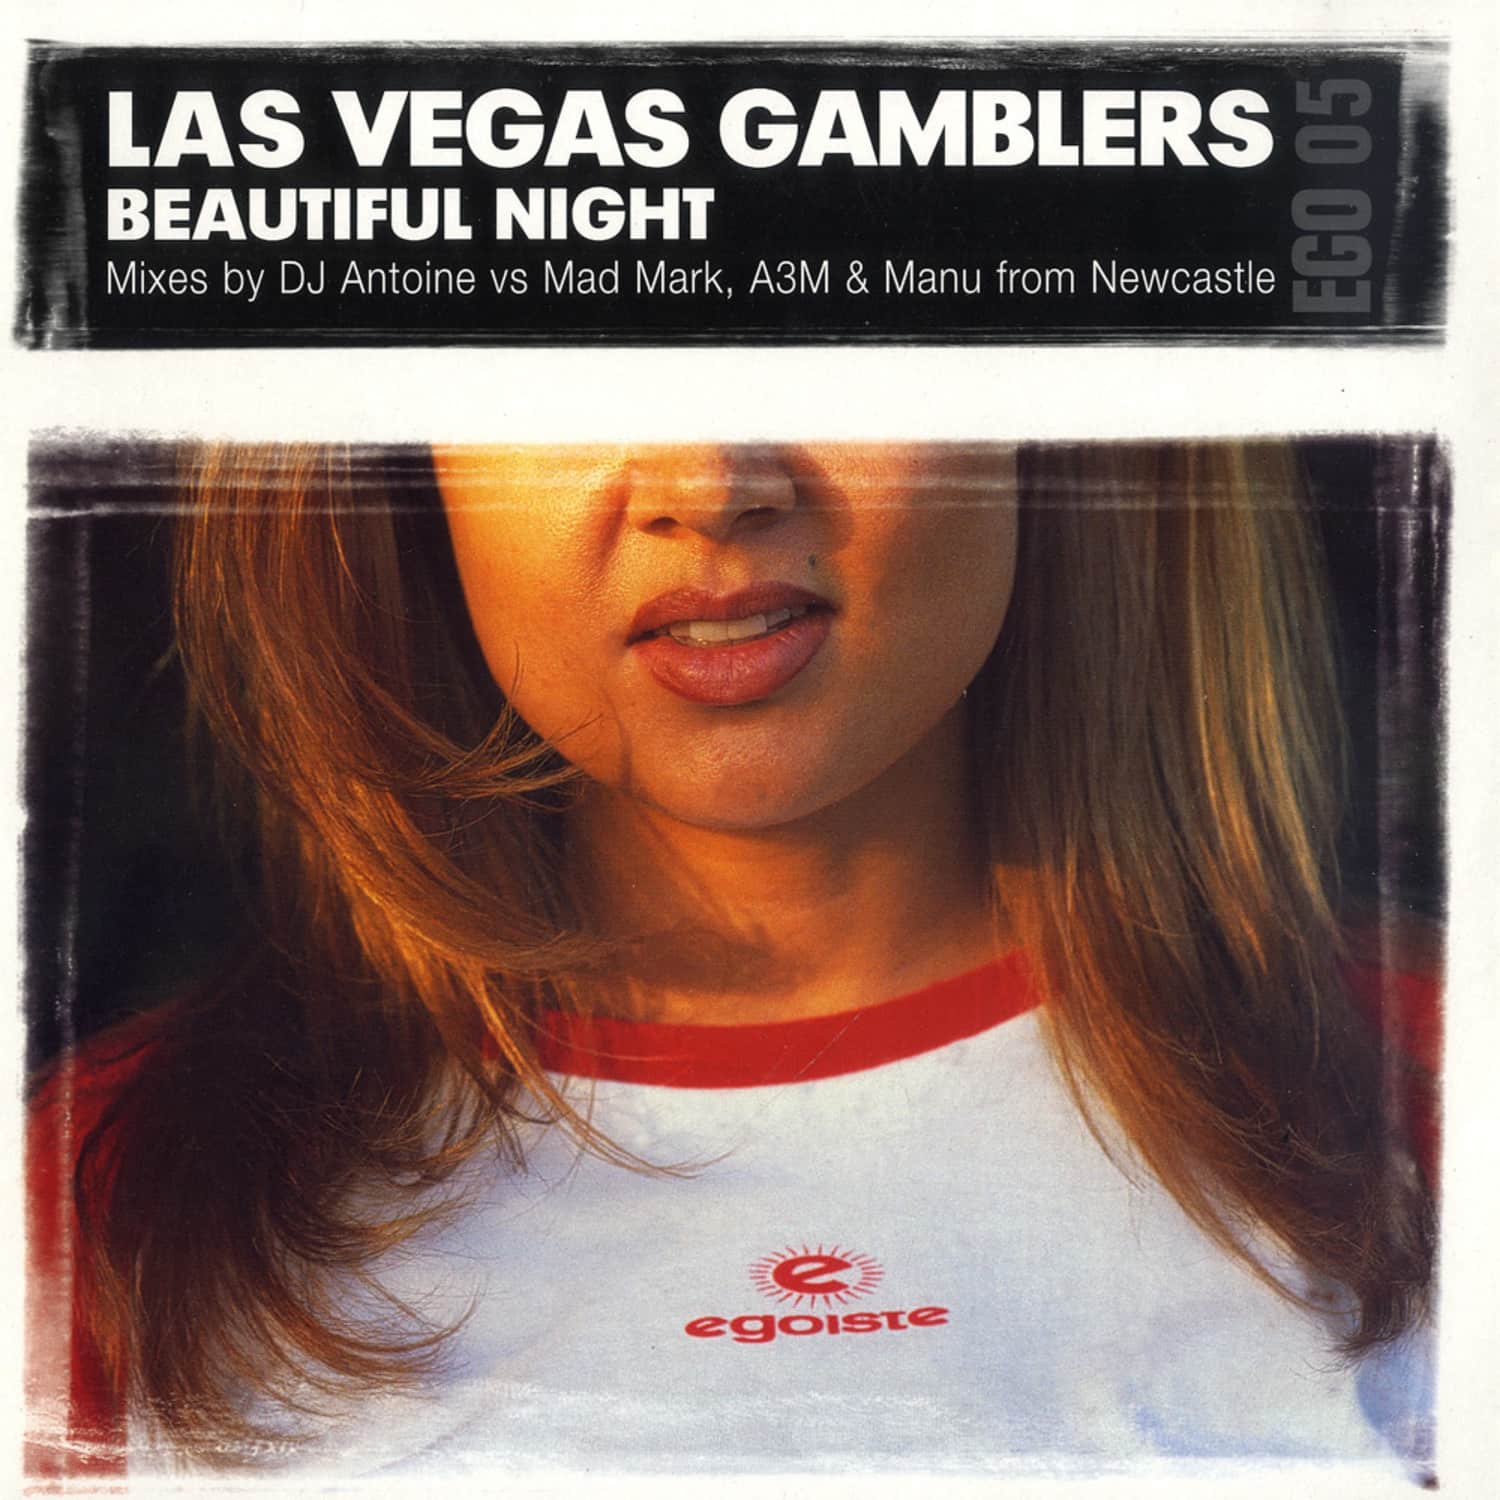 Las Vegas Gamblers - BEAUTIFUL NIGHT